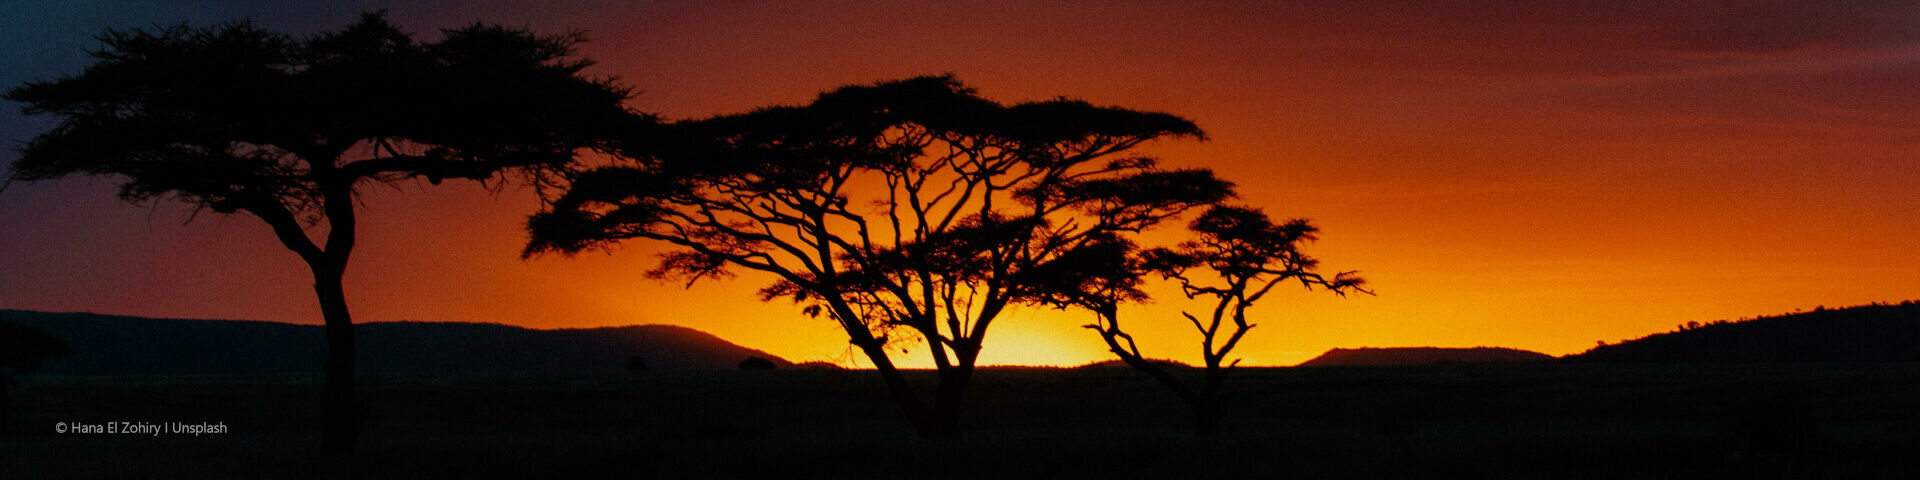 Banner Tours Safaris to Serengeti National Park Tanzania Hana El Zohiry